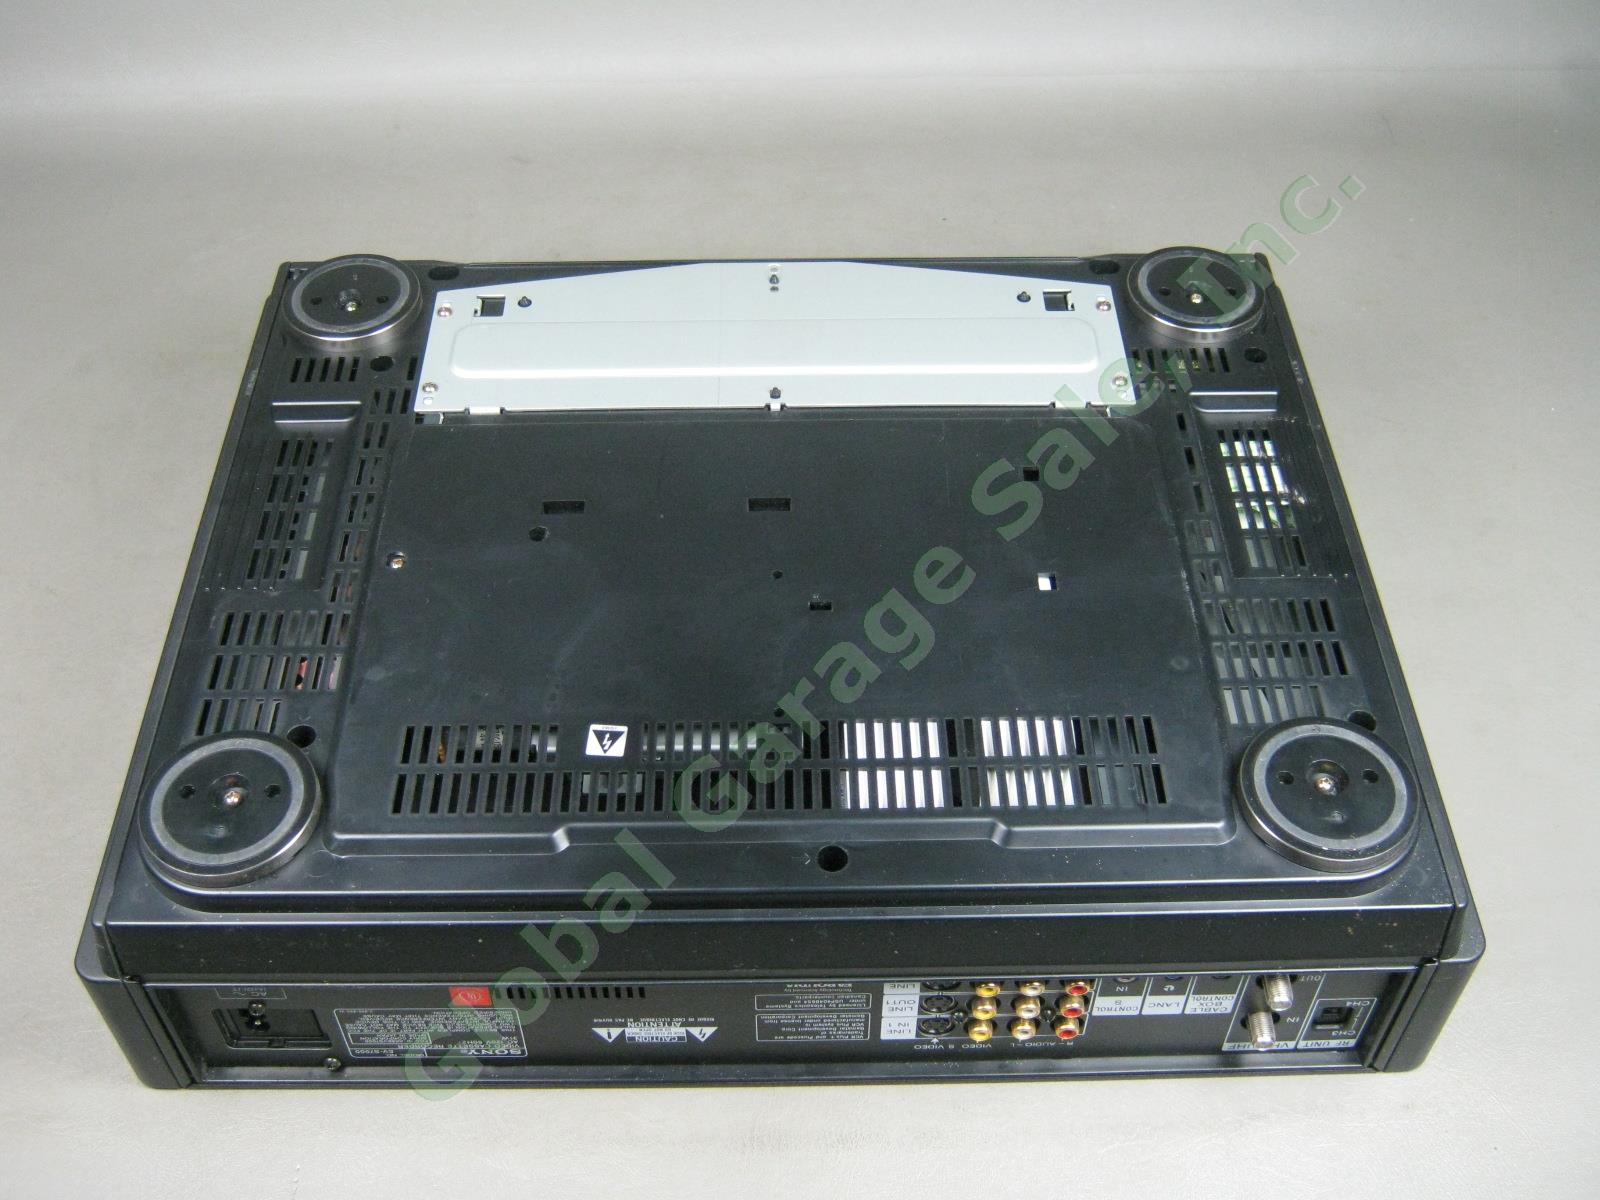 Sony EV-S7000 Hi8 8mm Digital HiFi Editing VCR Player Recorder +Remote Bundle NR 6